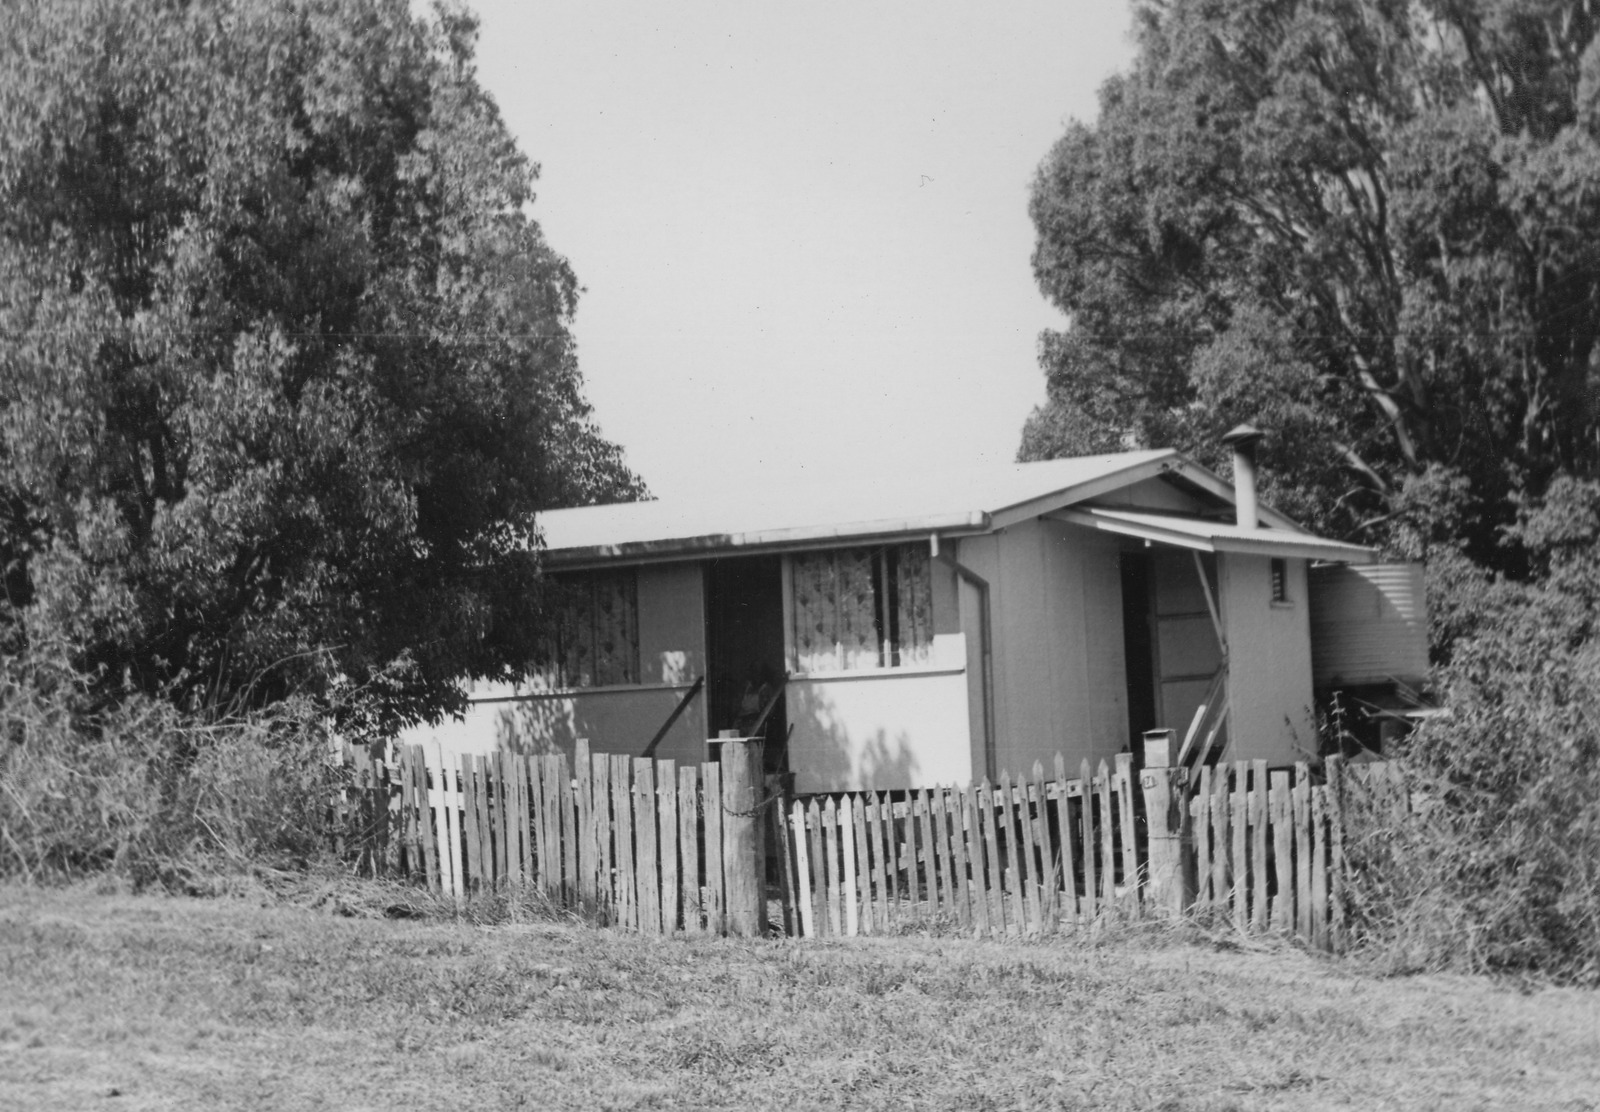 A fibro cement shack in Tewantin, Sunshine Coast